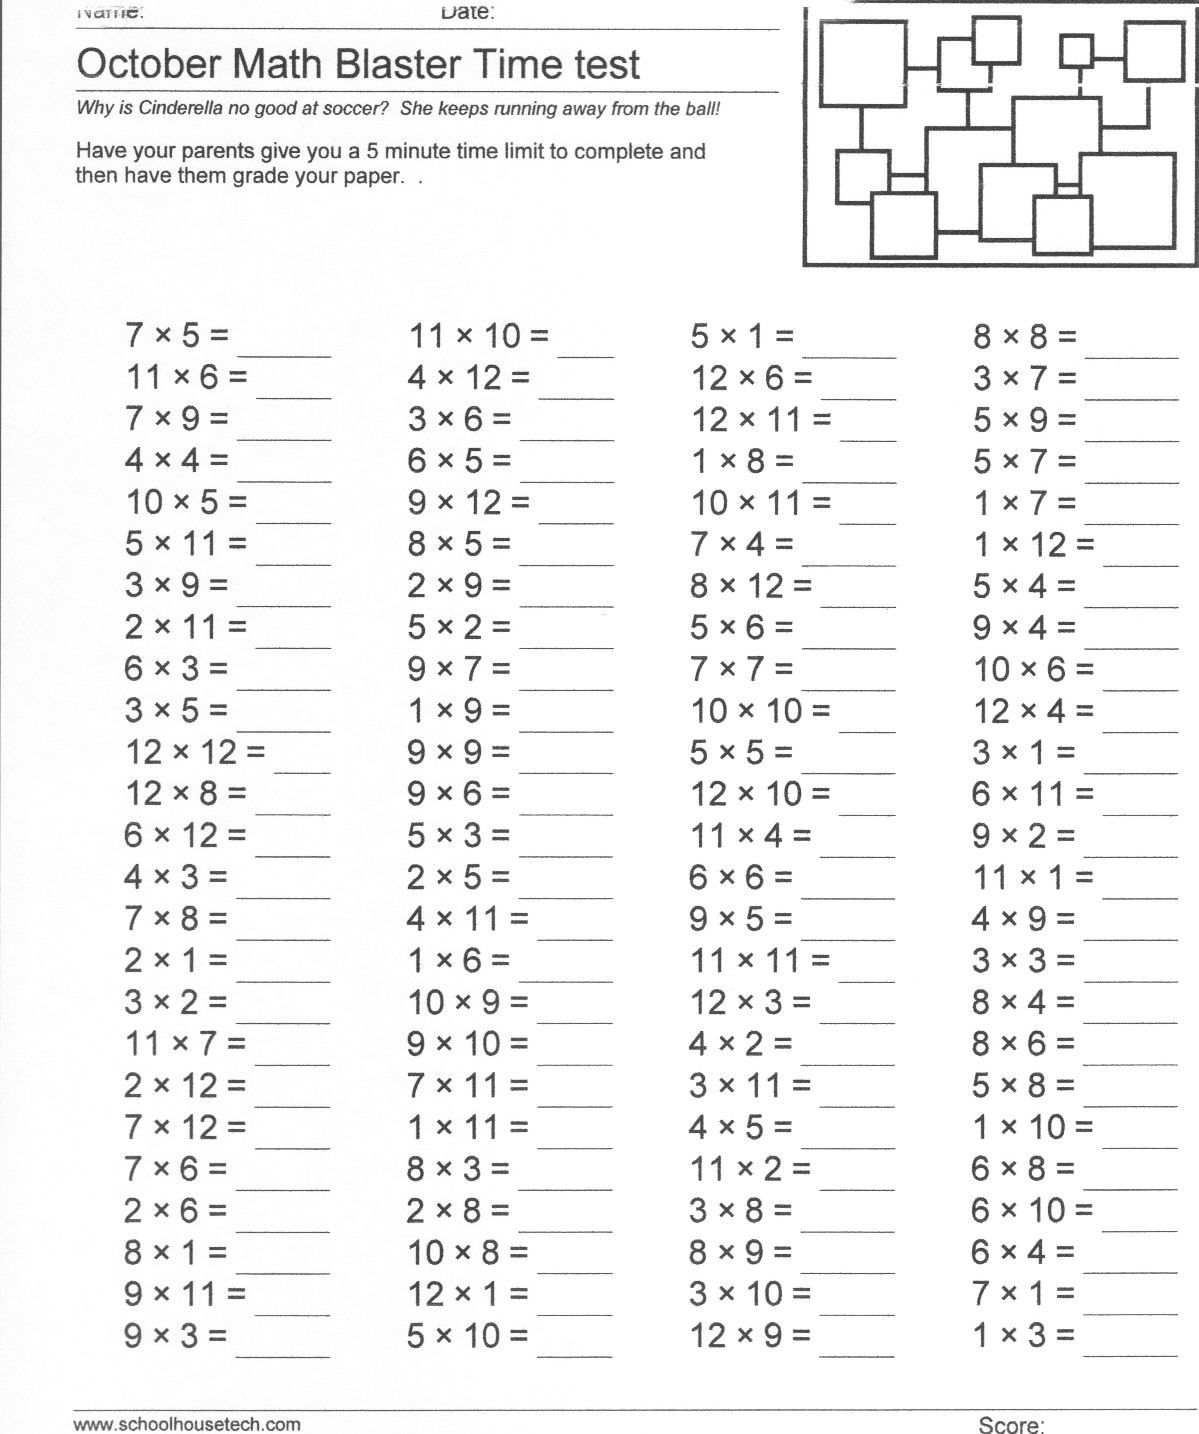 multiplication-worksheets-9-12-printablemultiplication